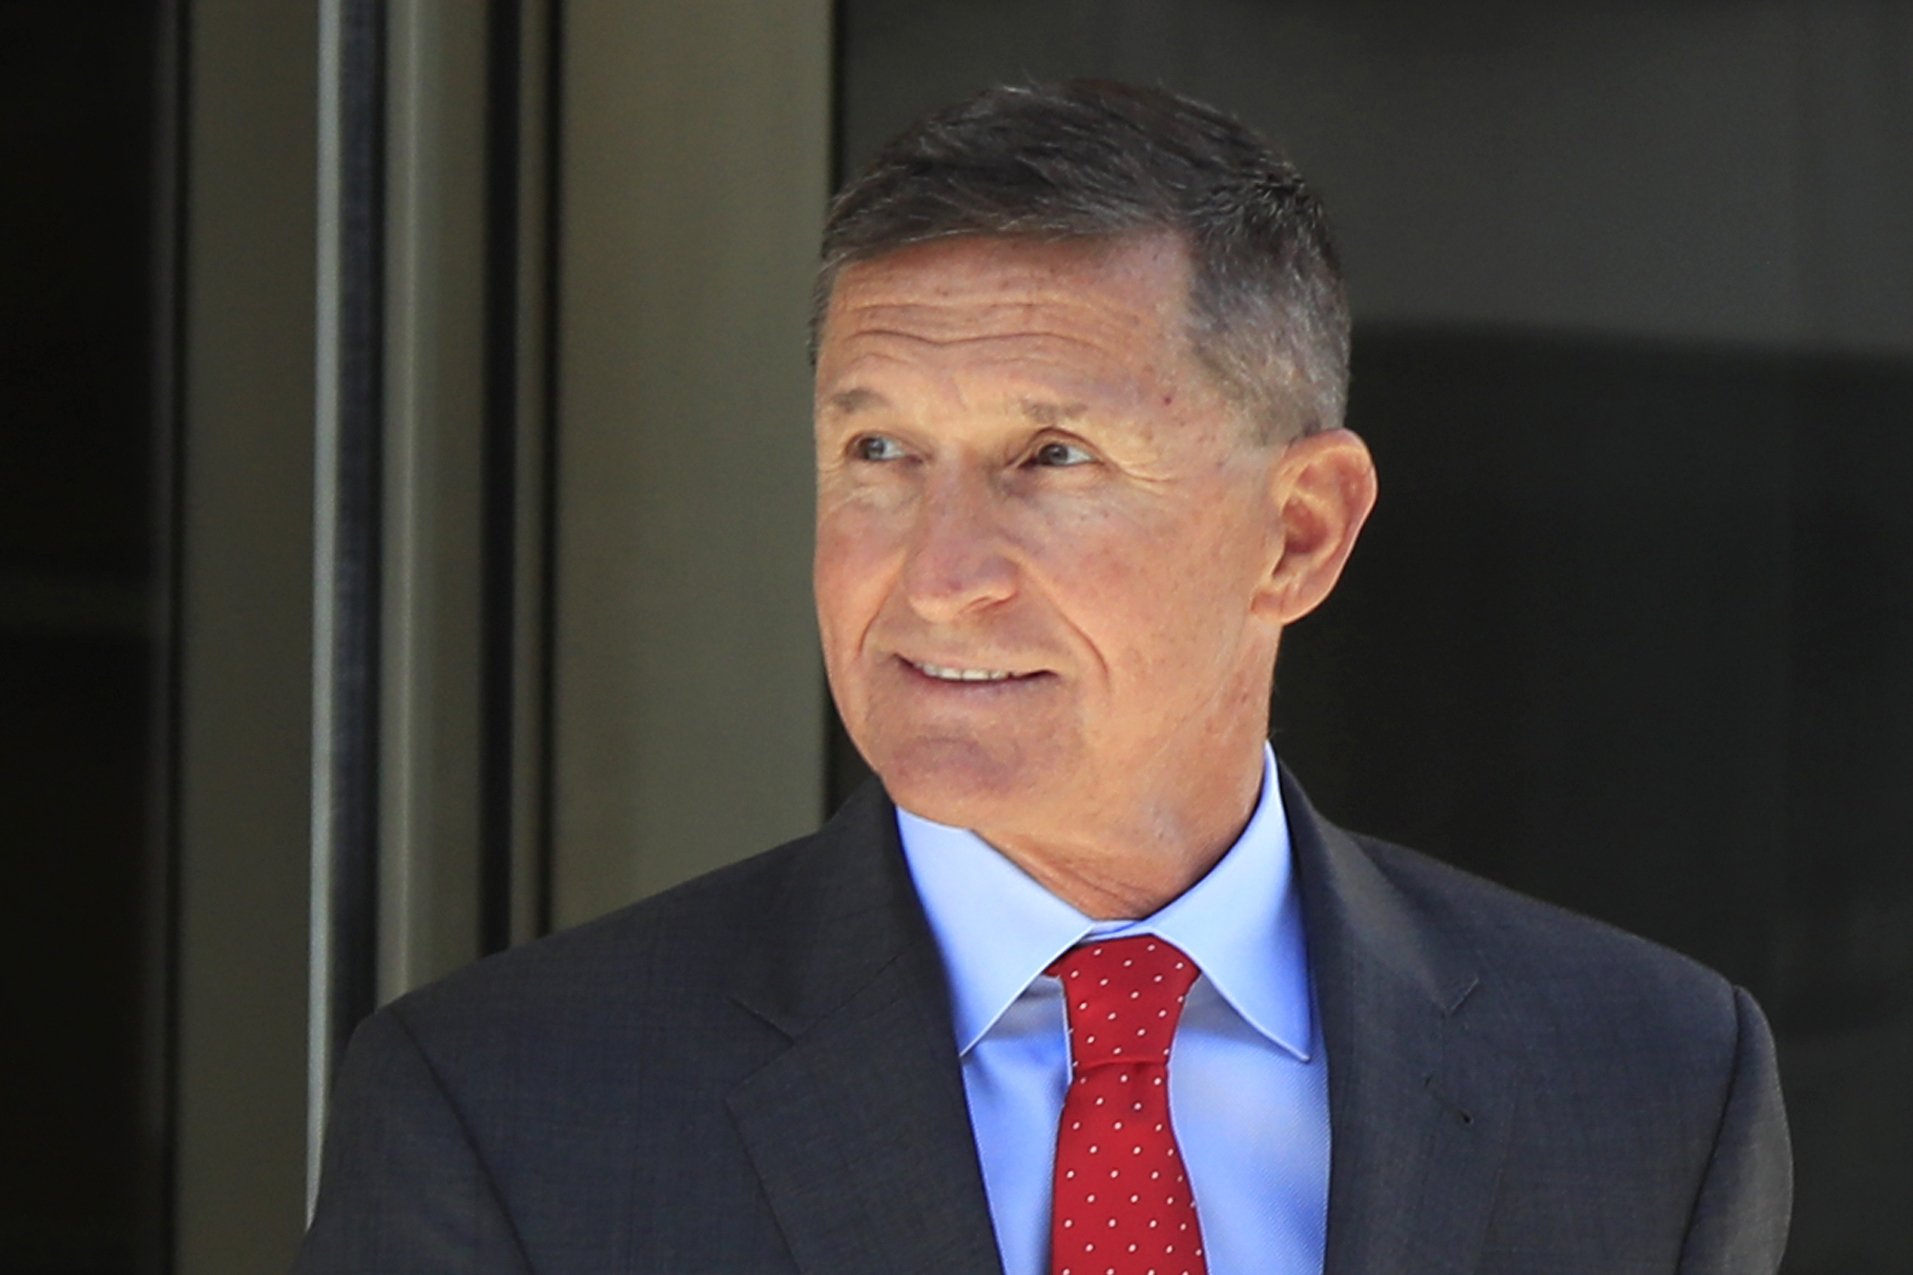 AP Exclusive: Justice Dept dropping Flynn's criminal case